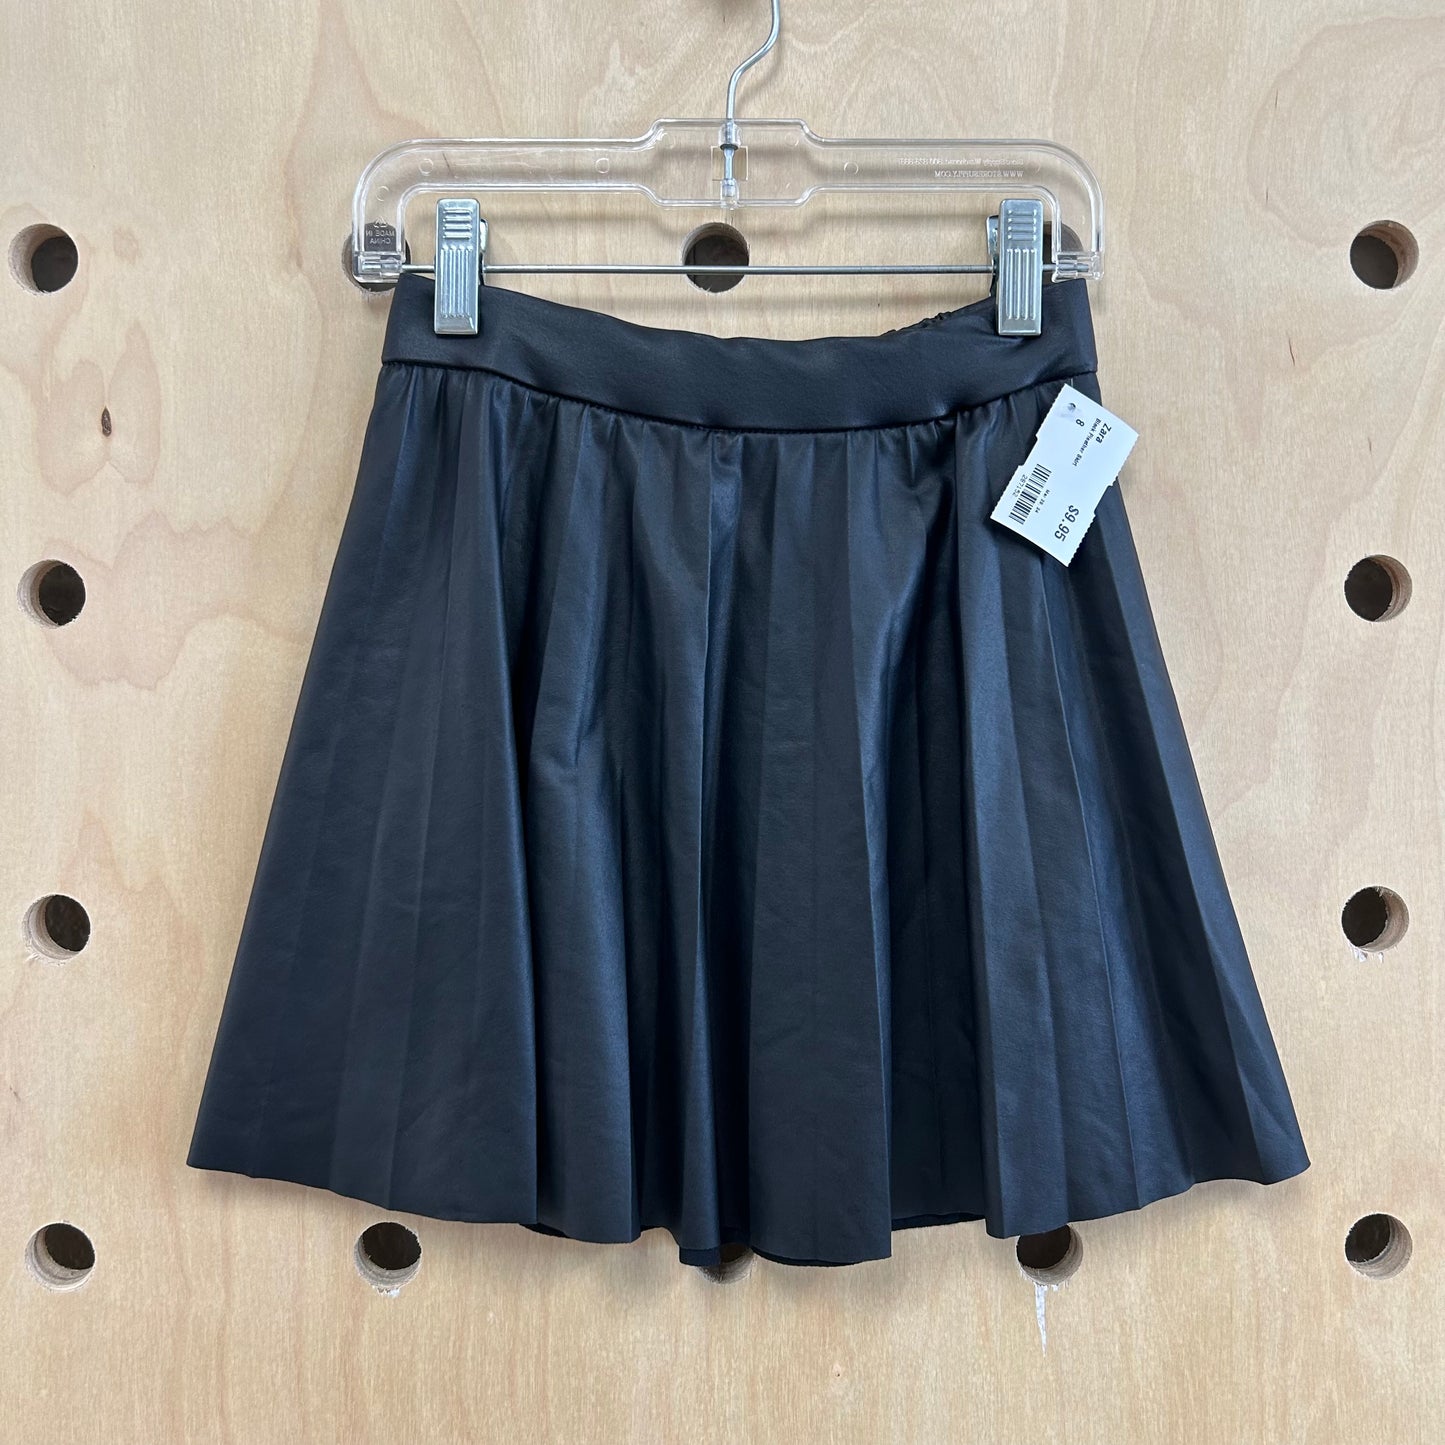 Black Pleather Skirt